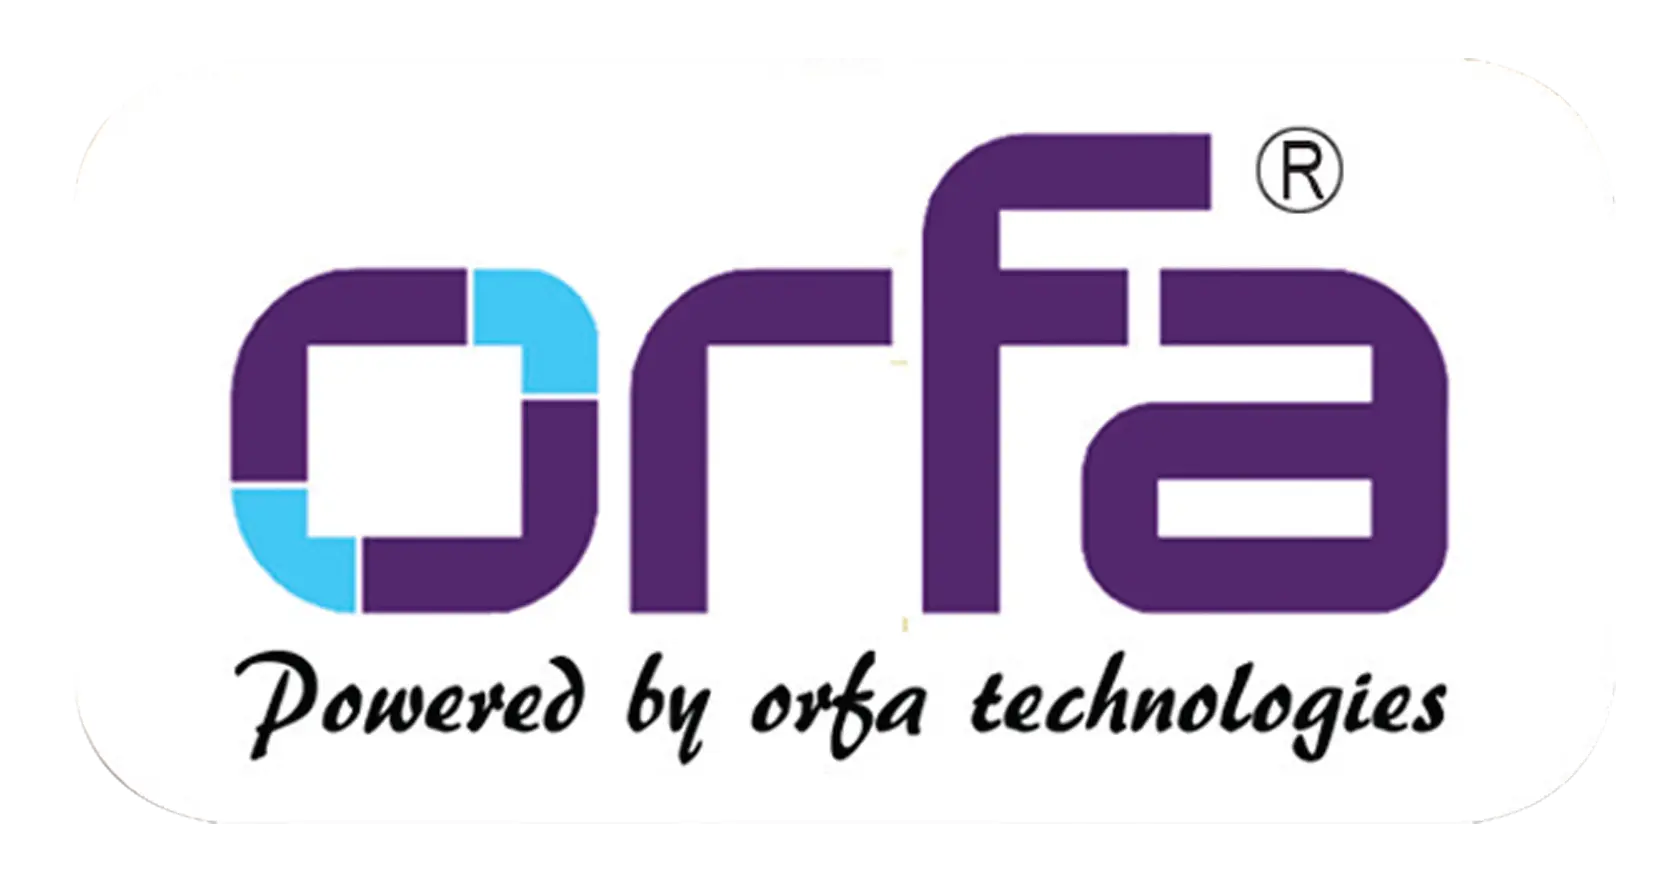 Orfa Technologies